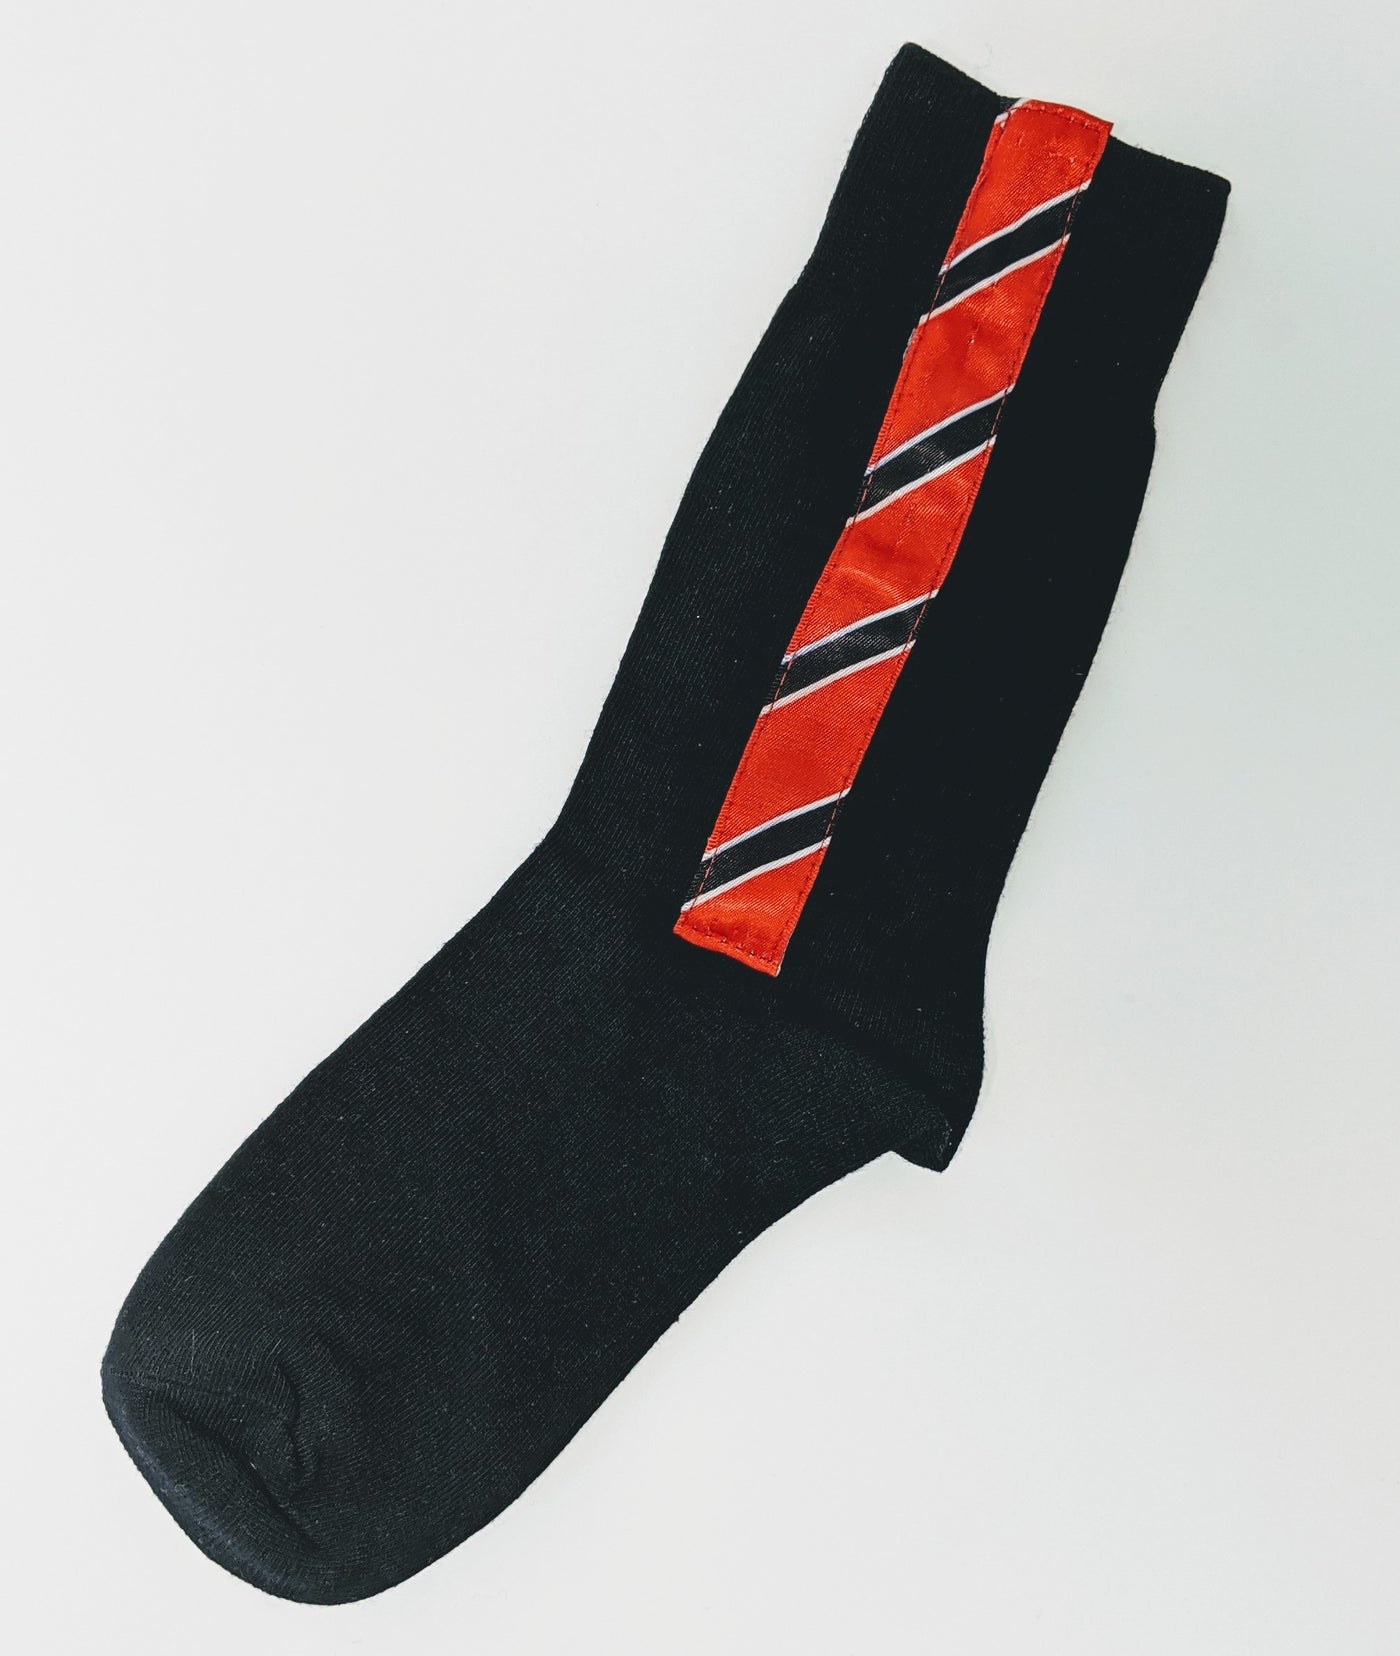 Socks with Trinidad Flag